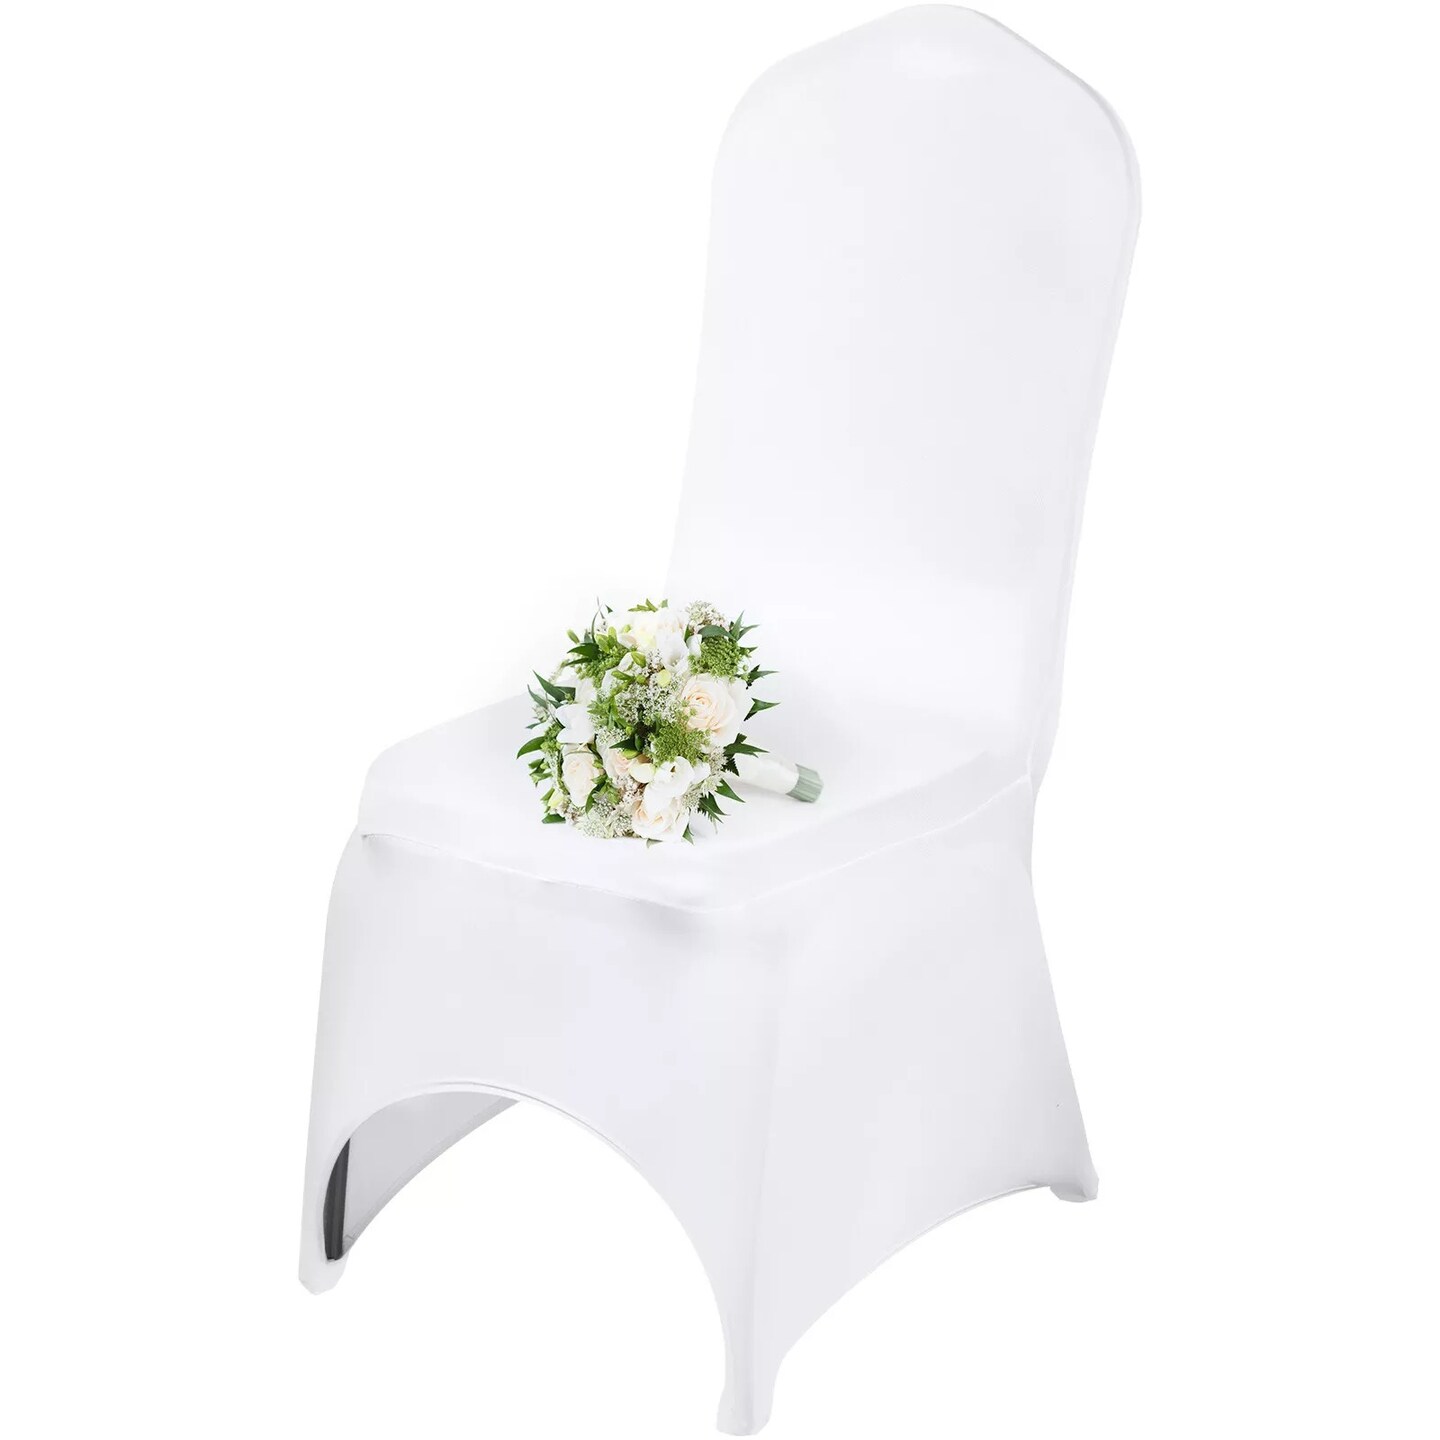 50PCS Stretch Spandex White Folding Chair Covers Room Celebrations Wedding